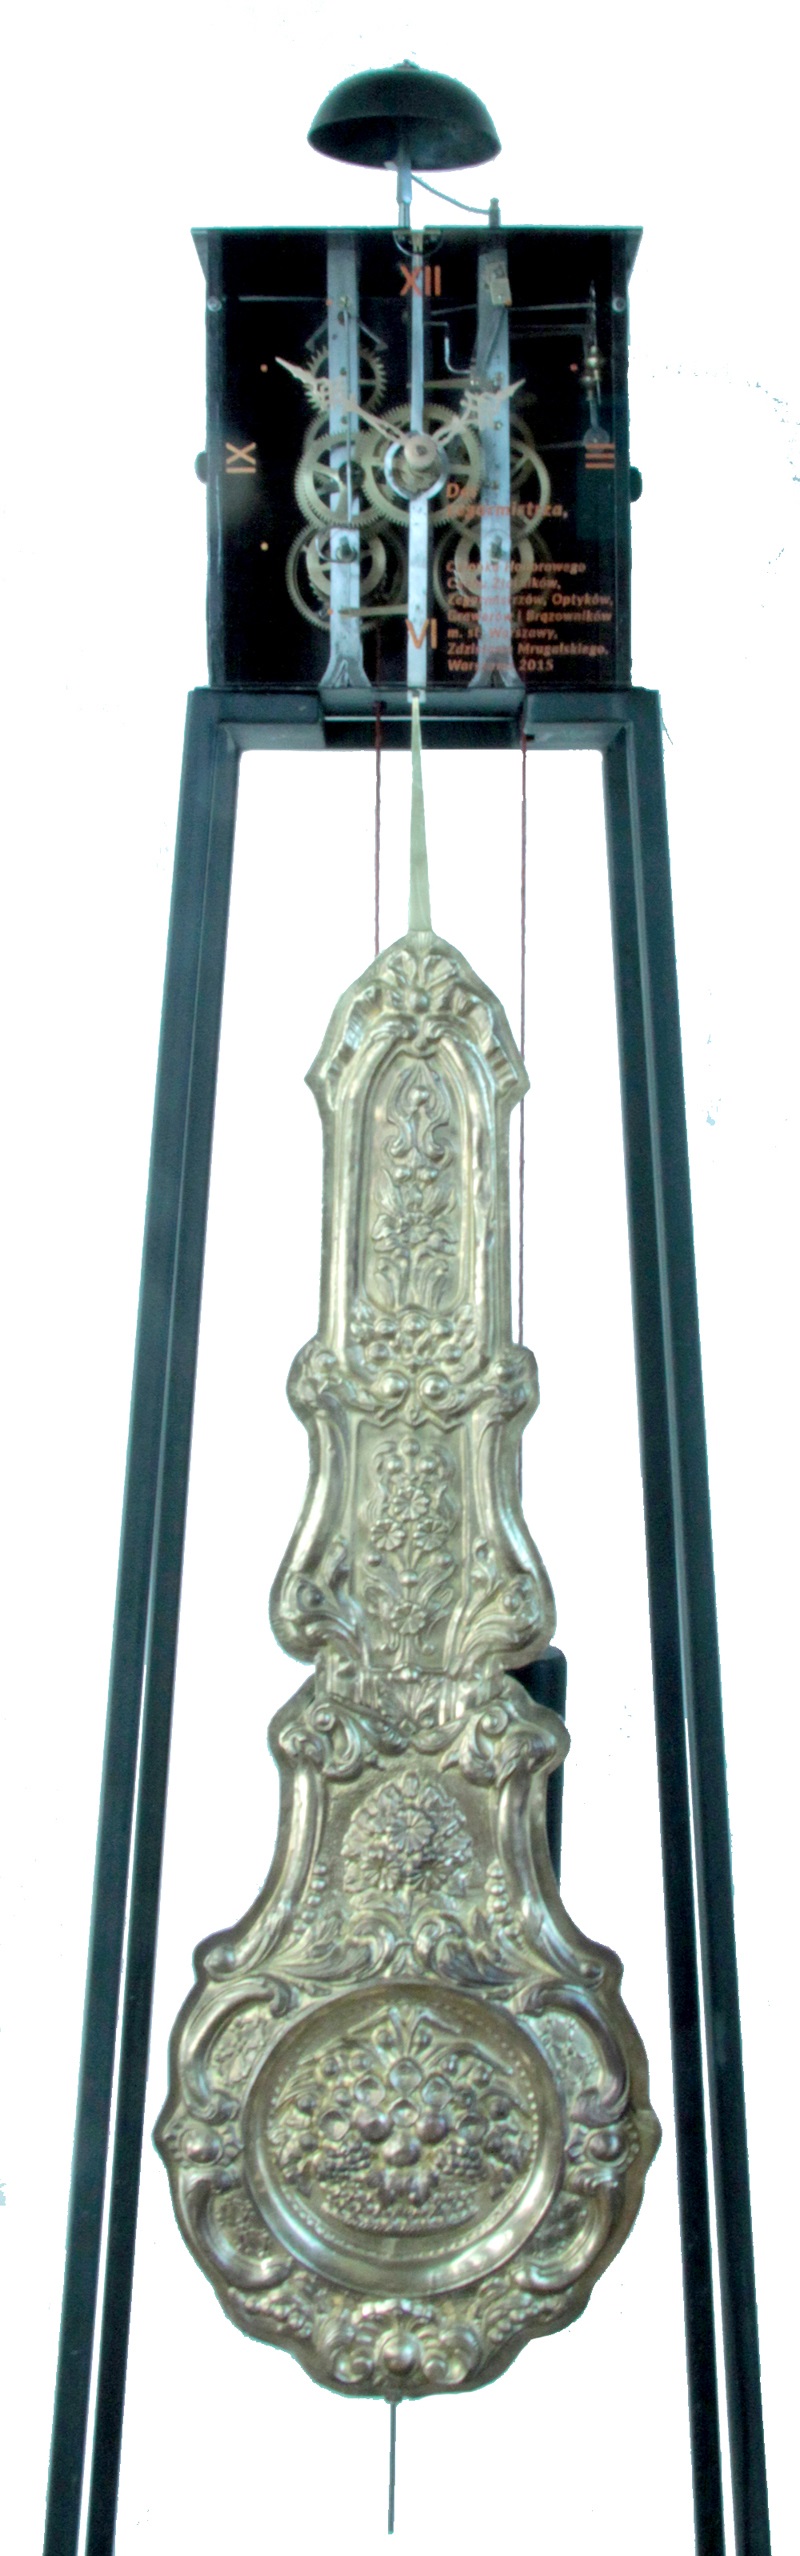 Zegar Comtoise dla Muzeum Cechowego